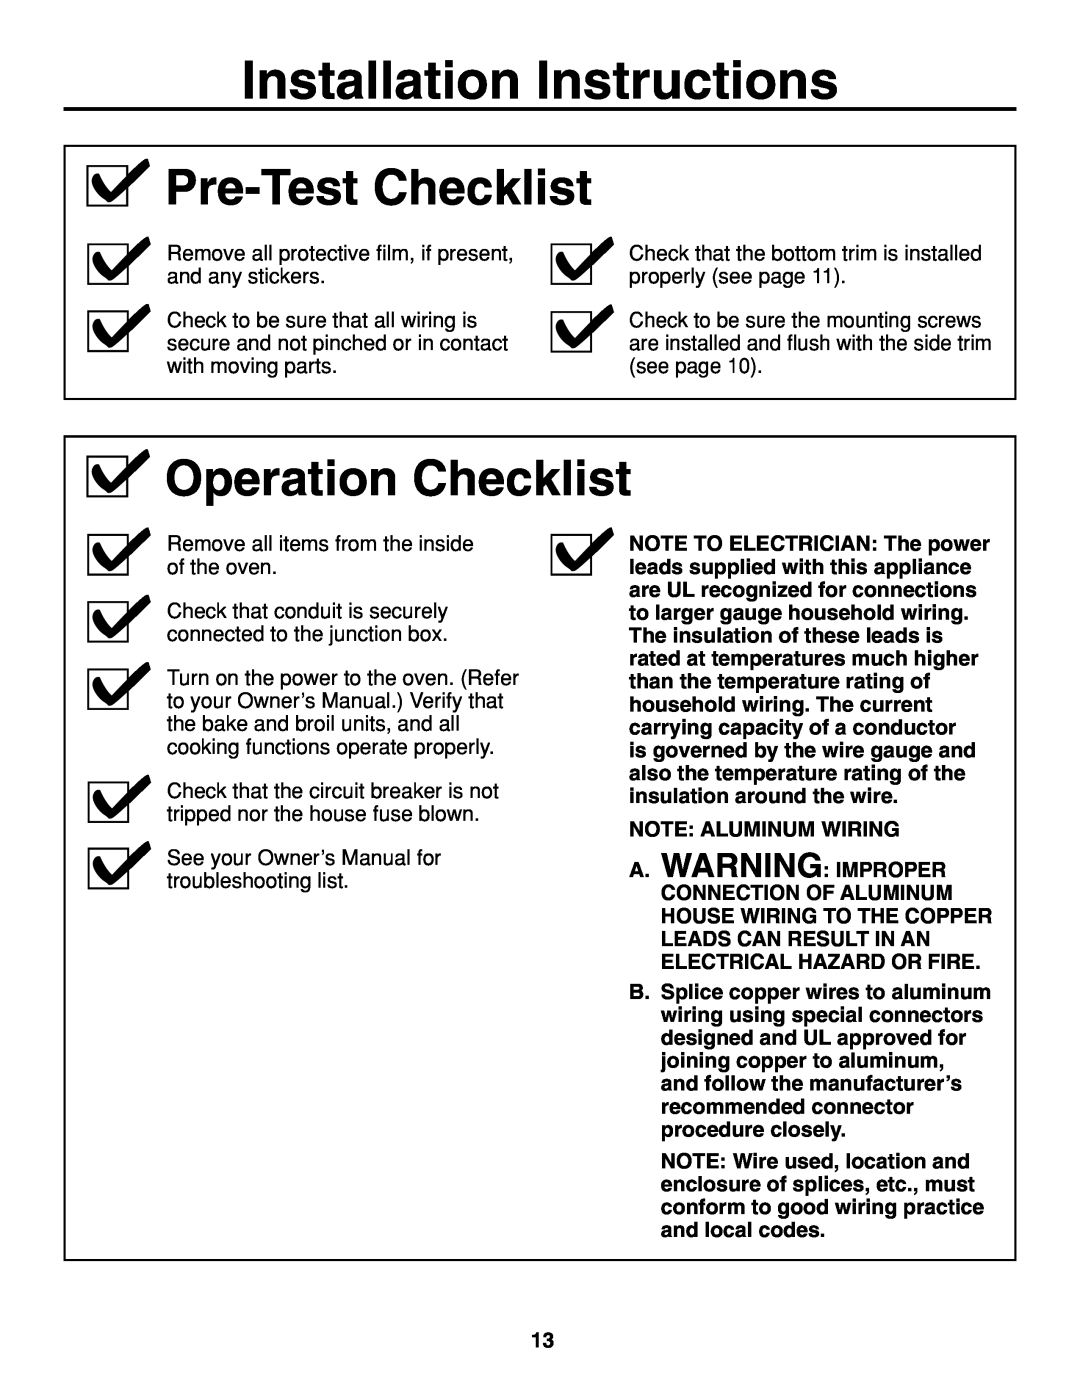 GE JTP20 installation instructions Operation Checklist, Installation Instructions, Pre-Test Checklist 